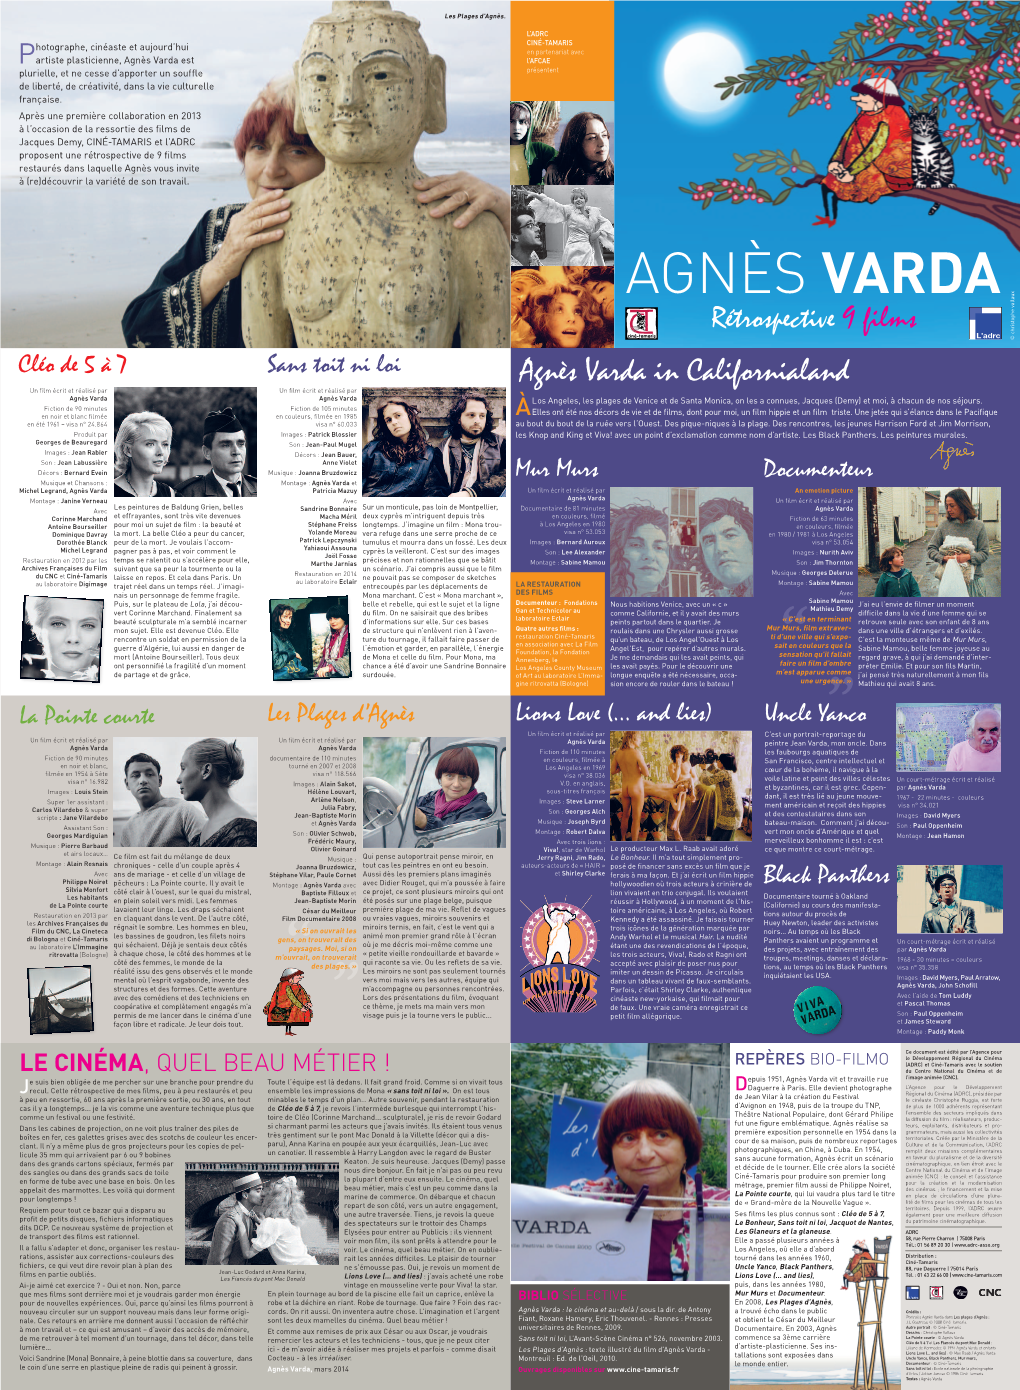 Agnès Varda in Californialand